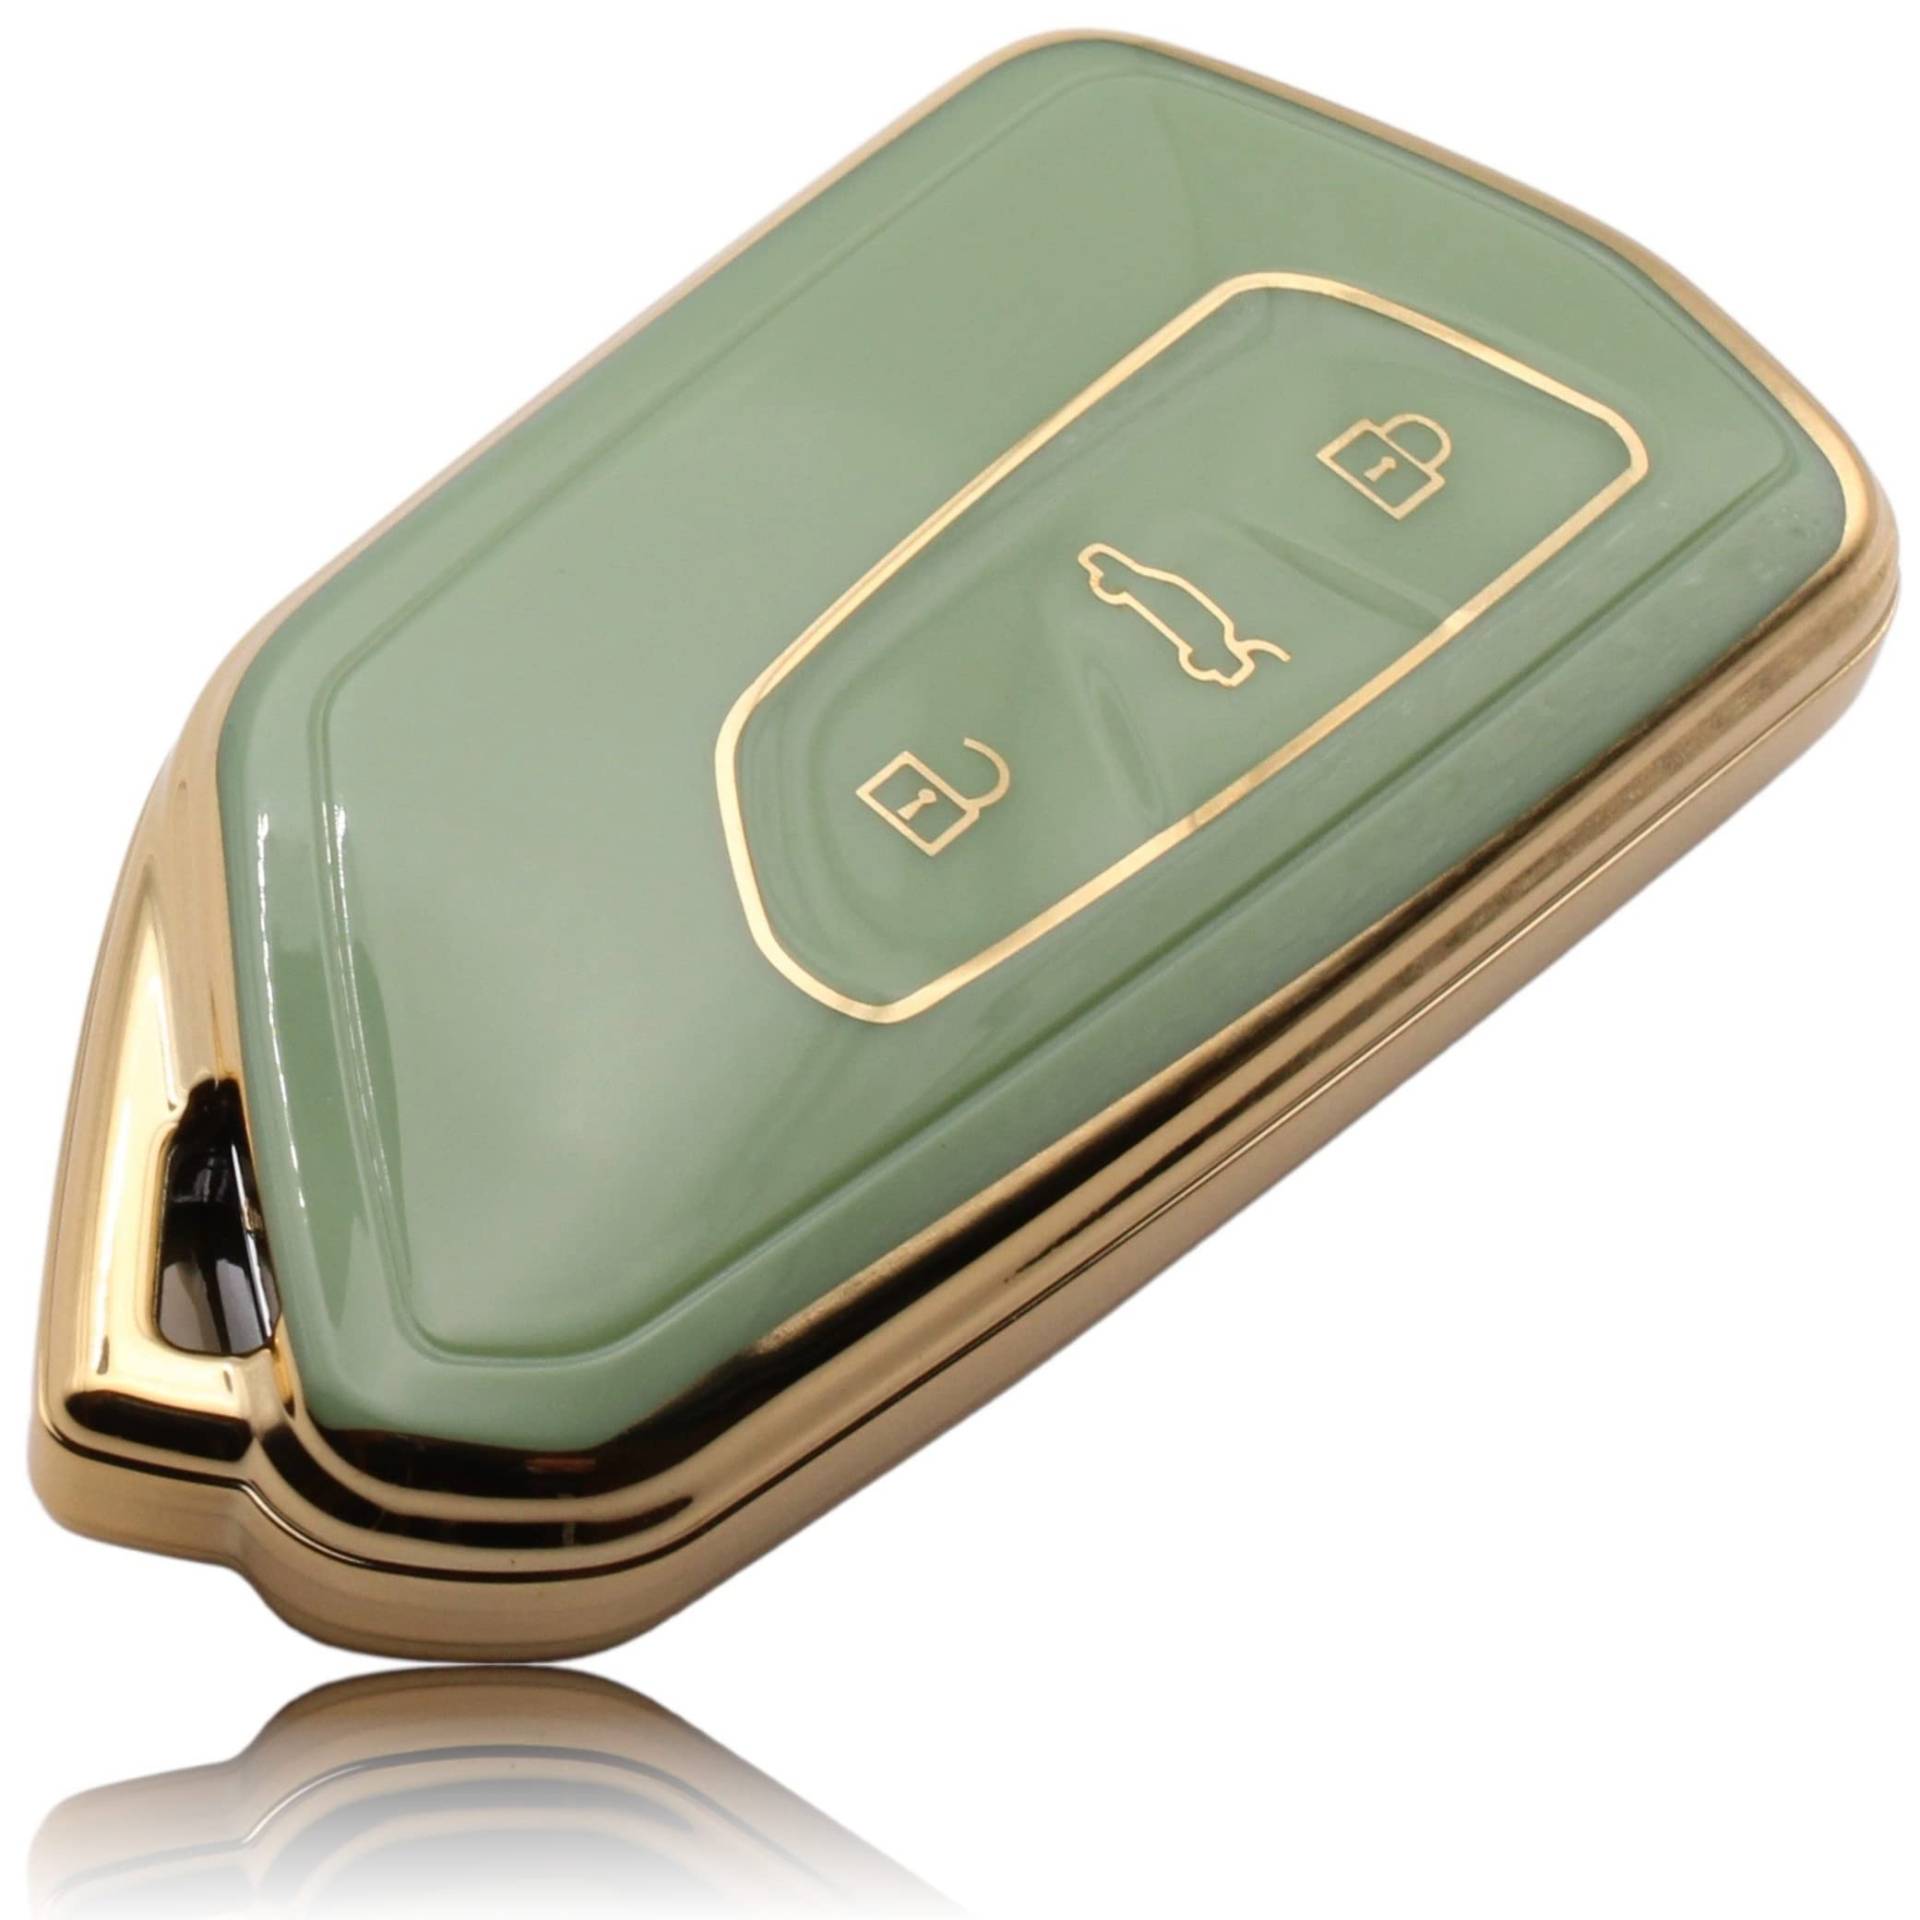 FOAMO Autoschlüssel Hülle Kompatibel mit VW, SEAT, Skoda, Cupra Autoschlüssel - TPU Schlüsselhülle - Schlüsselhülle - Schutz für Autoschlüssel Grün von FOAMO